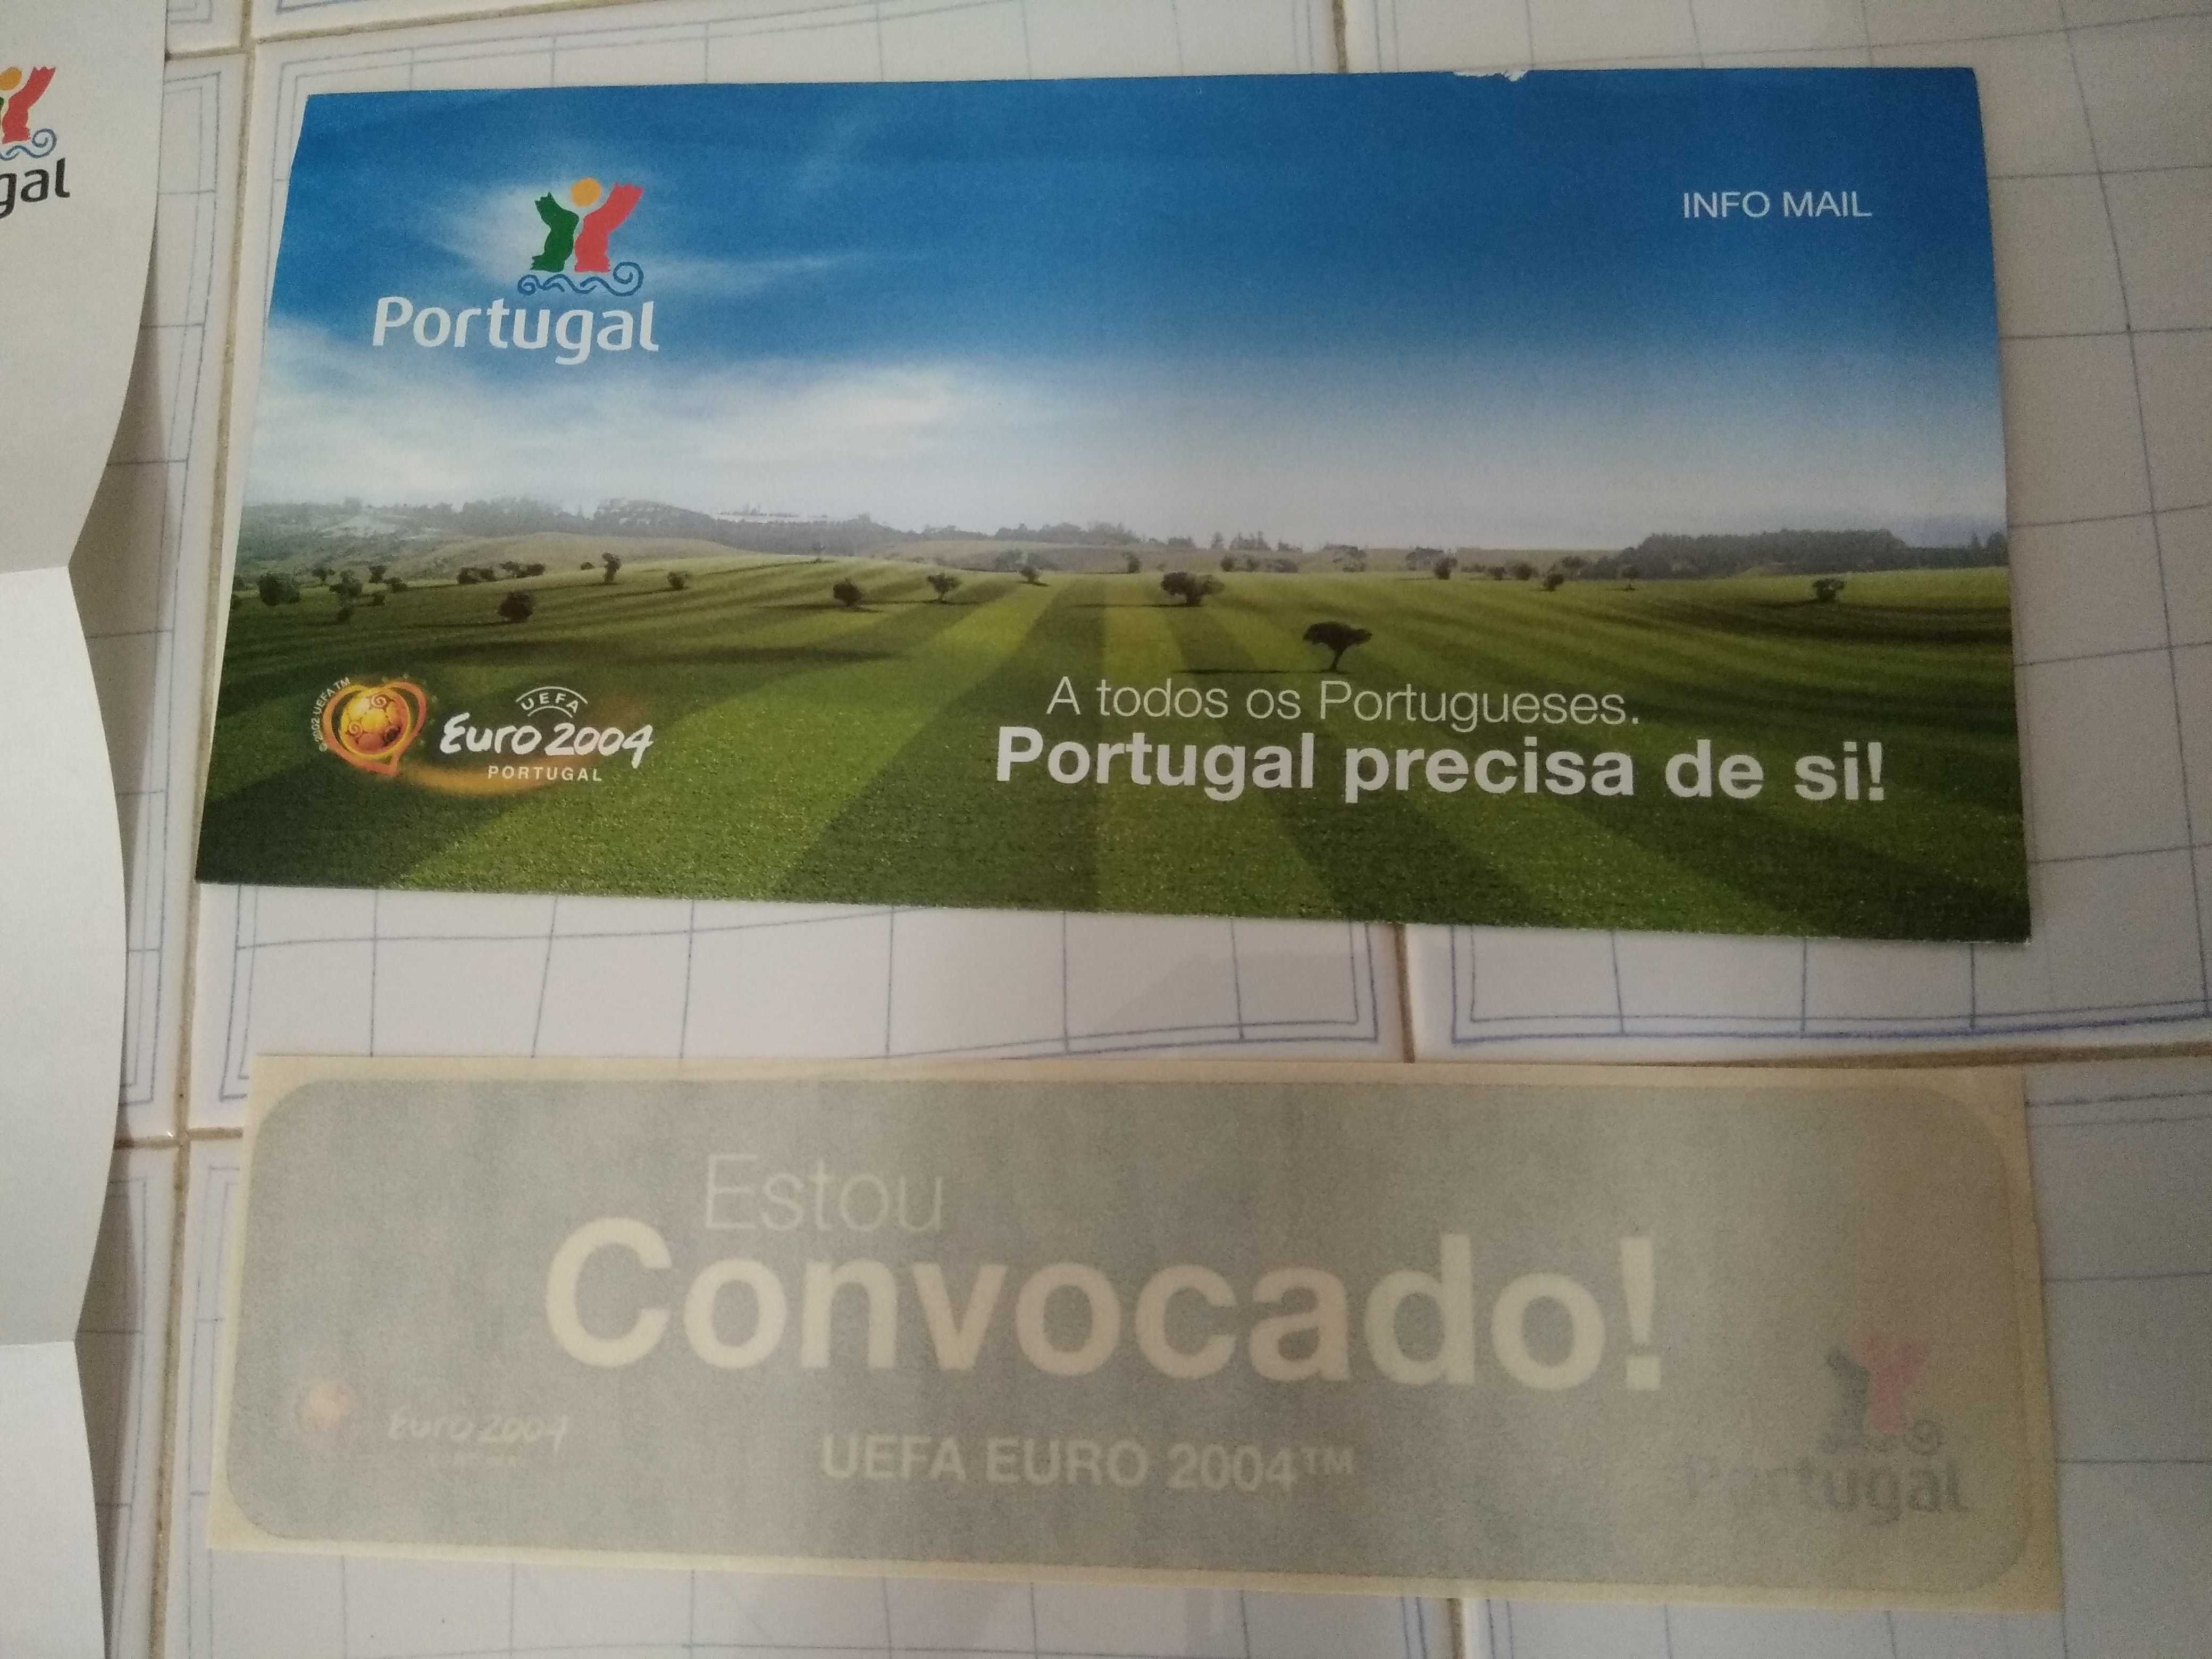 Carta UEFA Euro 2004 Portugal "Estou Convocado!" - Luiz Felipe Scolari